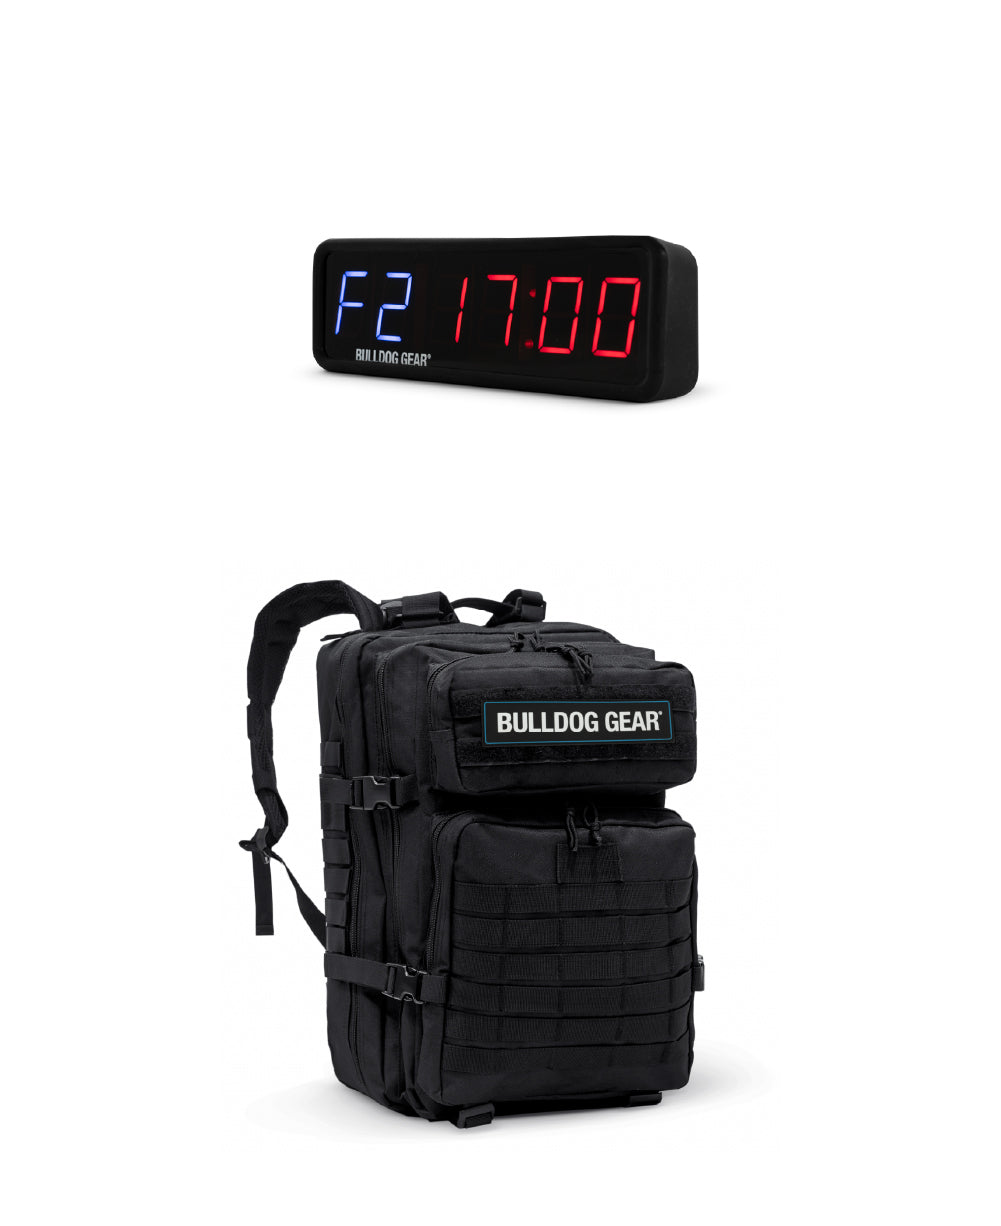 Bulldog Gear tactical backpack and home gym timer timer bundles